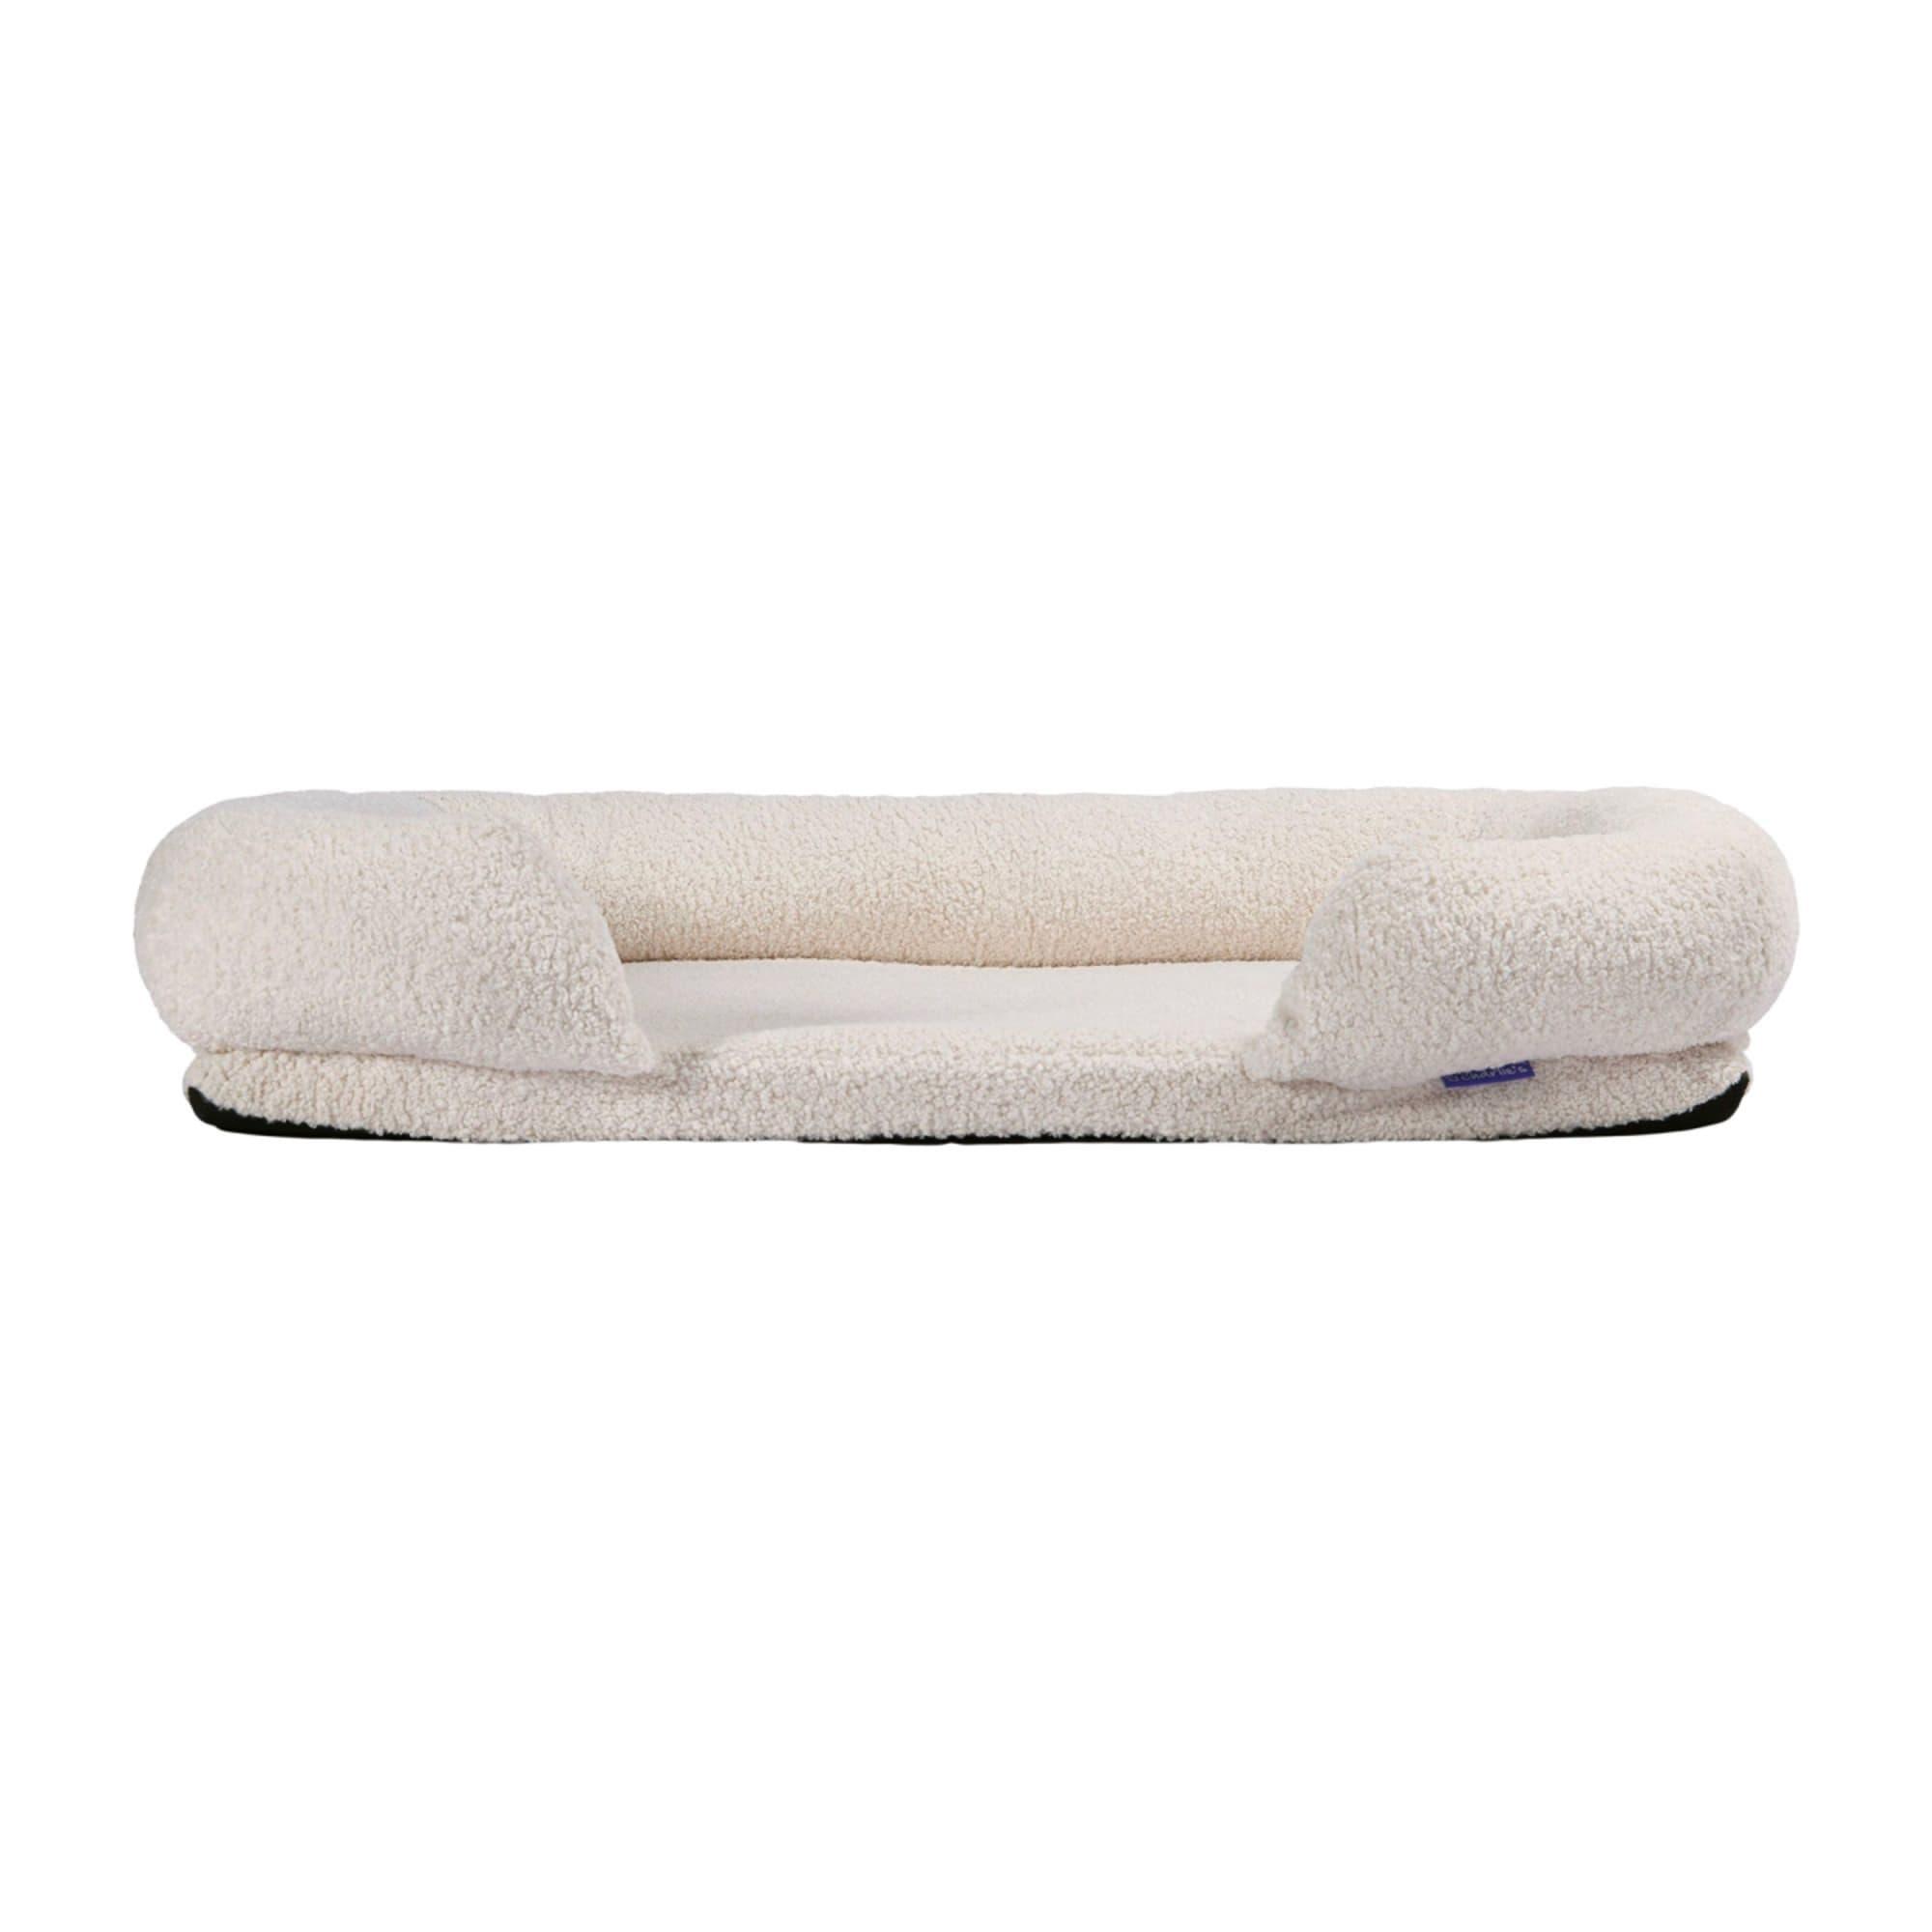 Charlie's Teddy Fleece Orthopedic Memory Foam Sofa Dog Bed Large Cream Image 5